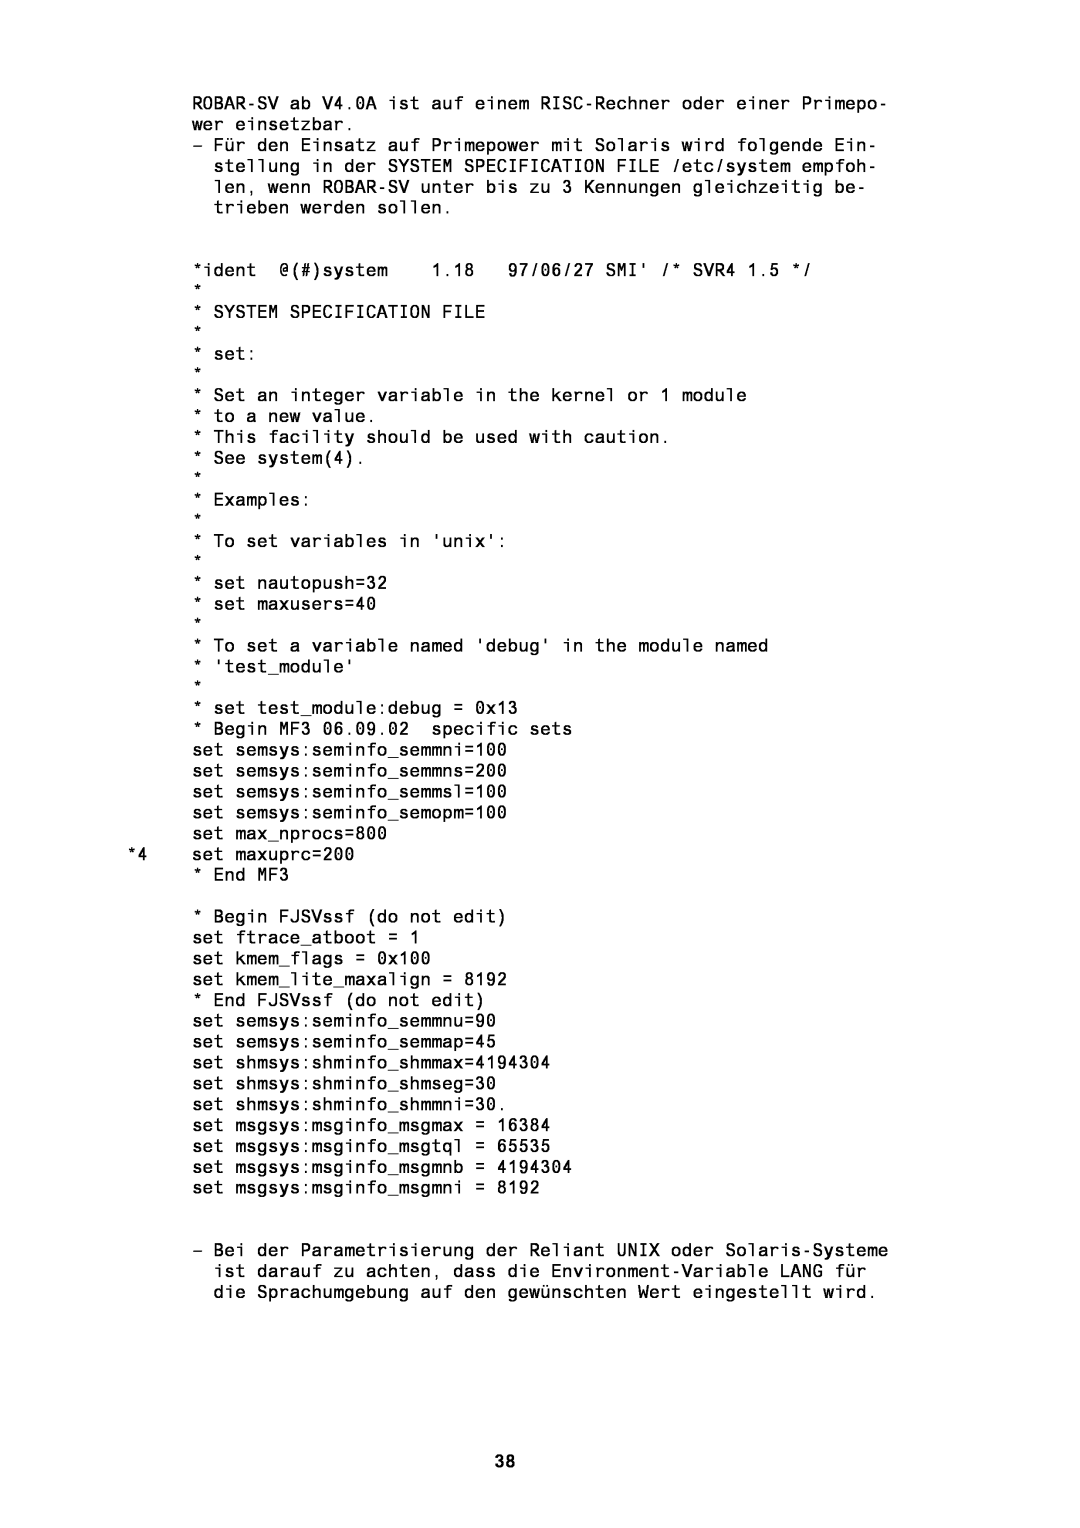 Fujitsu BS2000/OSD manual ident @#system, 1.18 97/06/27 SMI /* SVR4, SYSTEM SPECIFICATION FILE set, set testmoduledebug = 